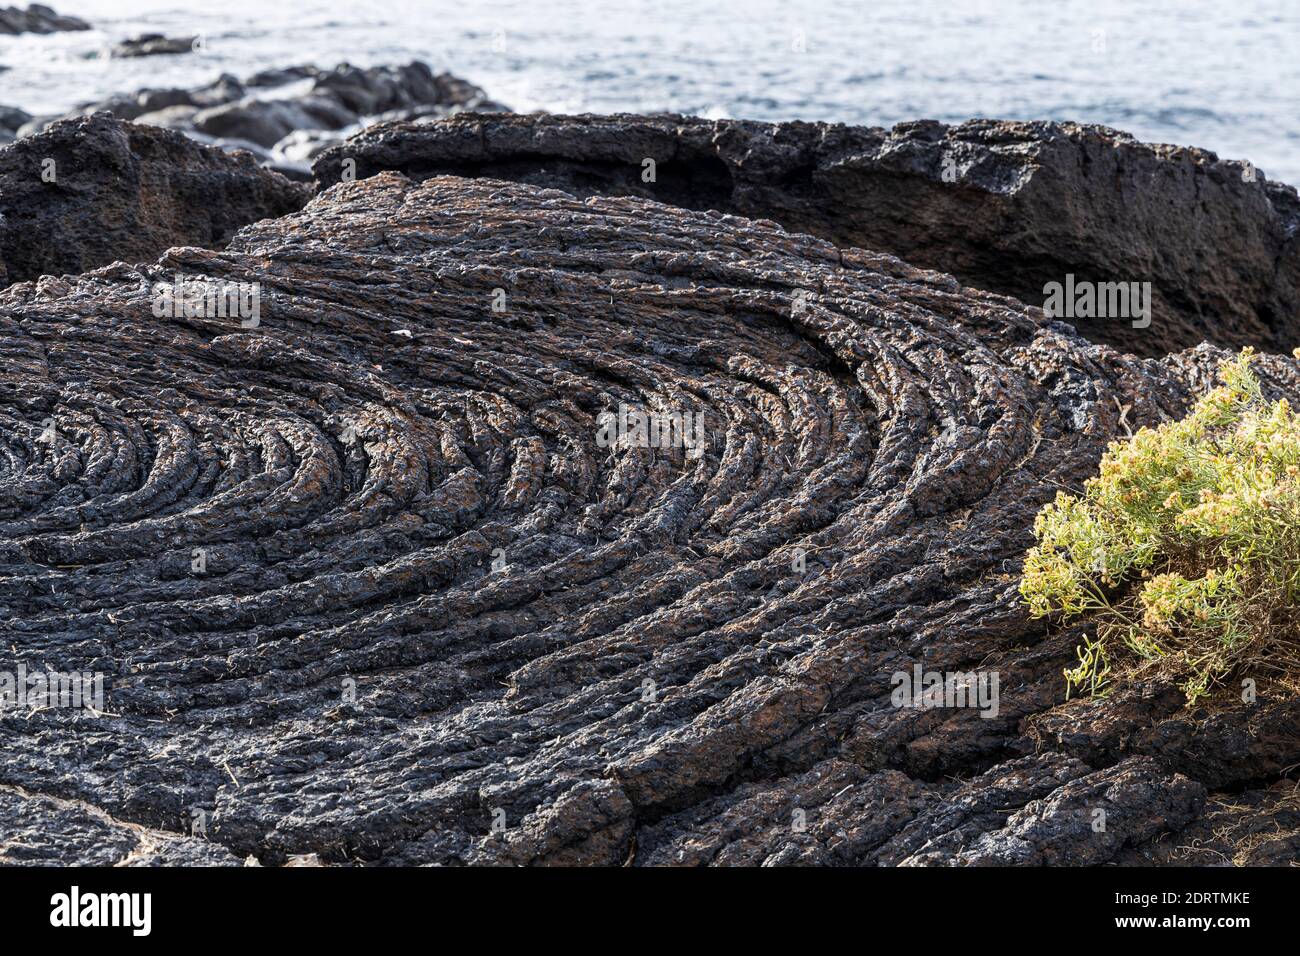 Pahoehoe, ropy lava, volcanic rock formations on the west coast, Playa San Juan, Tenerife, Canary Islands, Spain Stock Photo